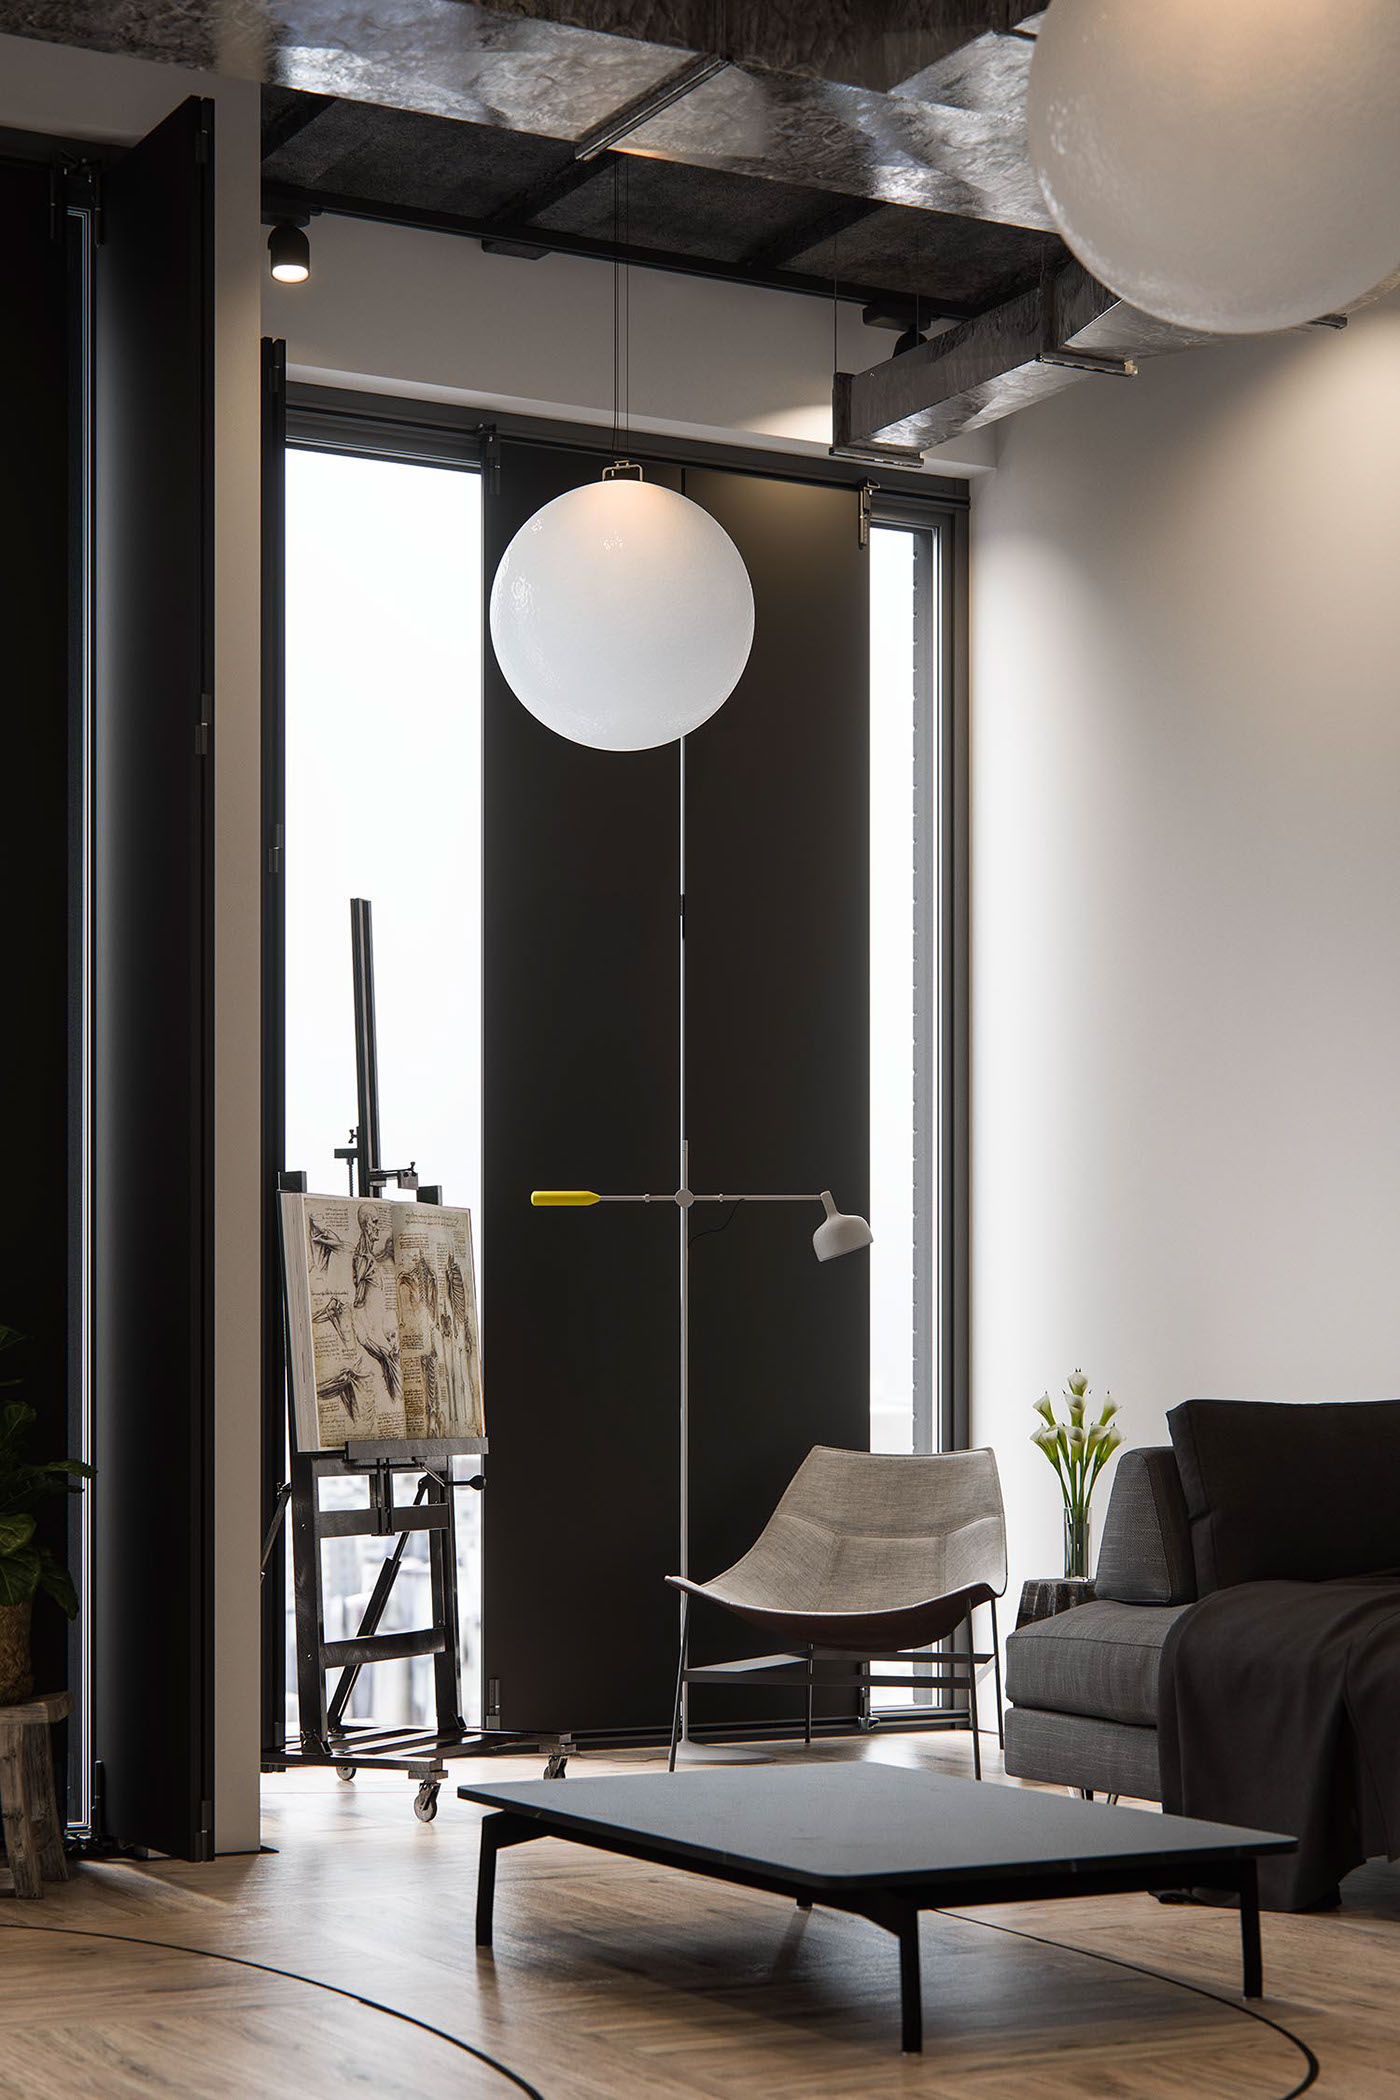 design Interior penthouse living room kitchen bedroom vray 3D rendered New York